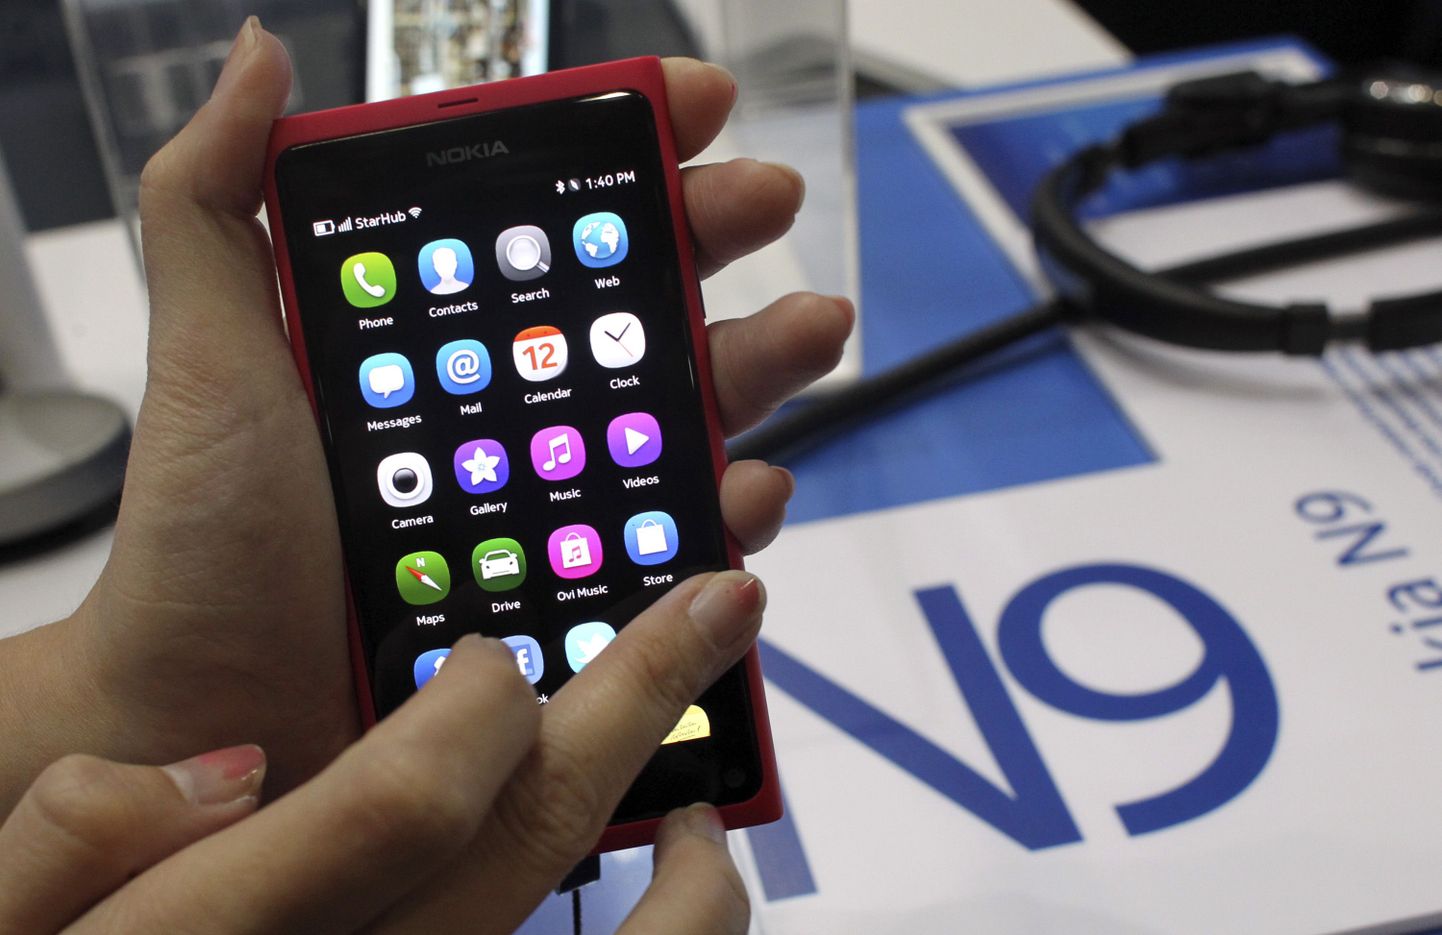 Смартфон Nokia N9